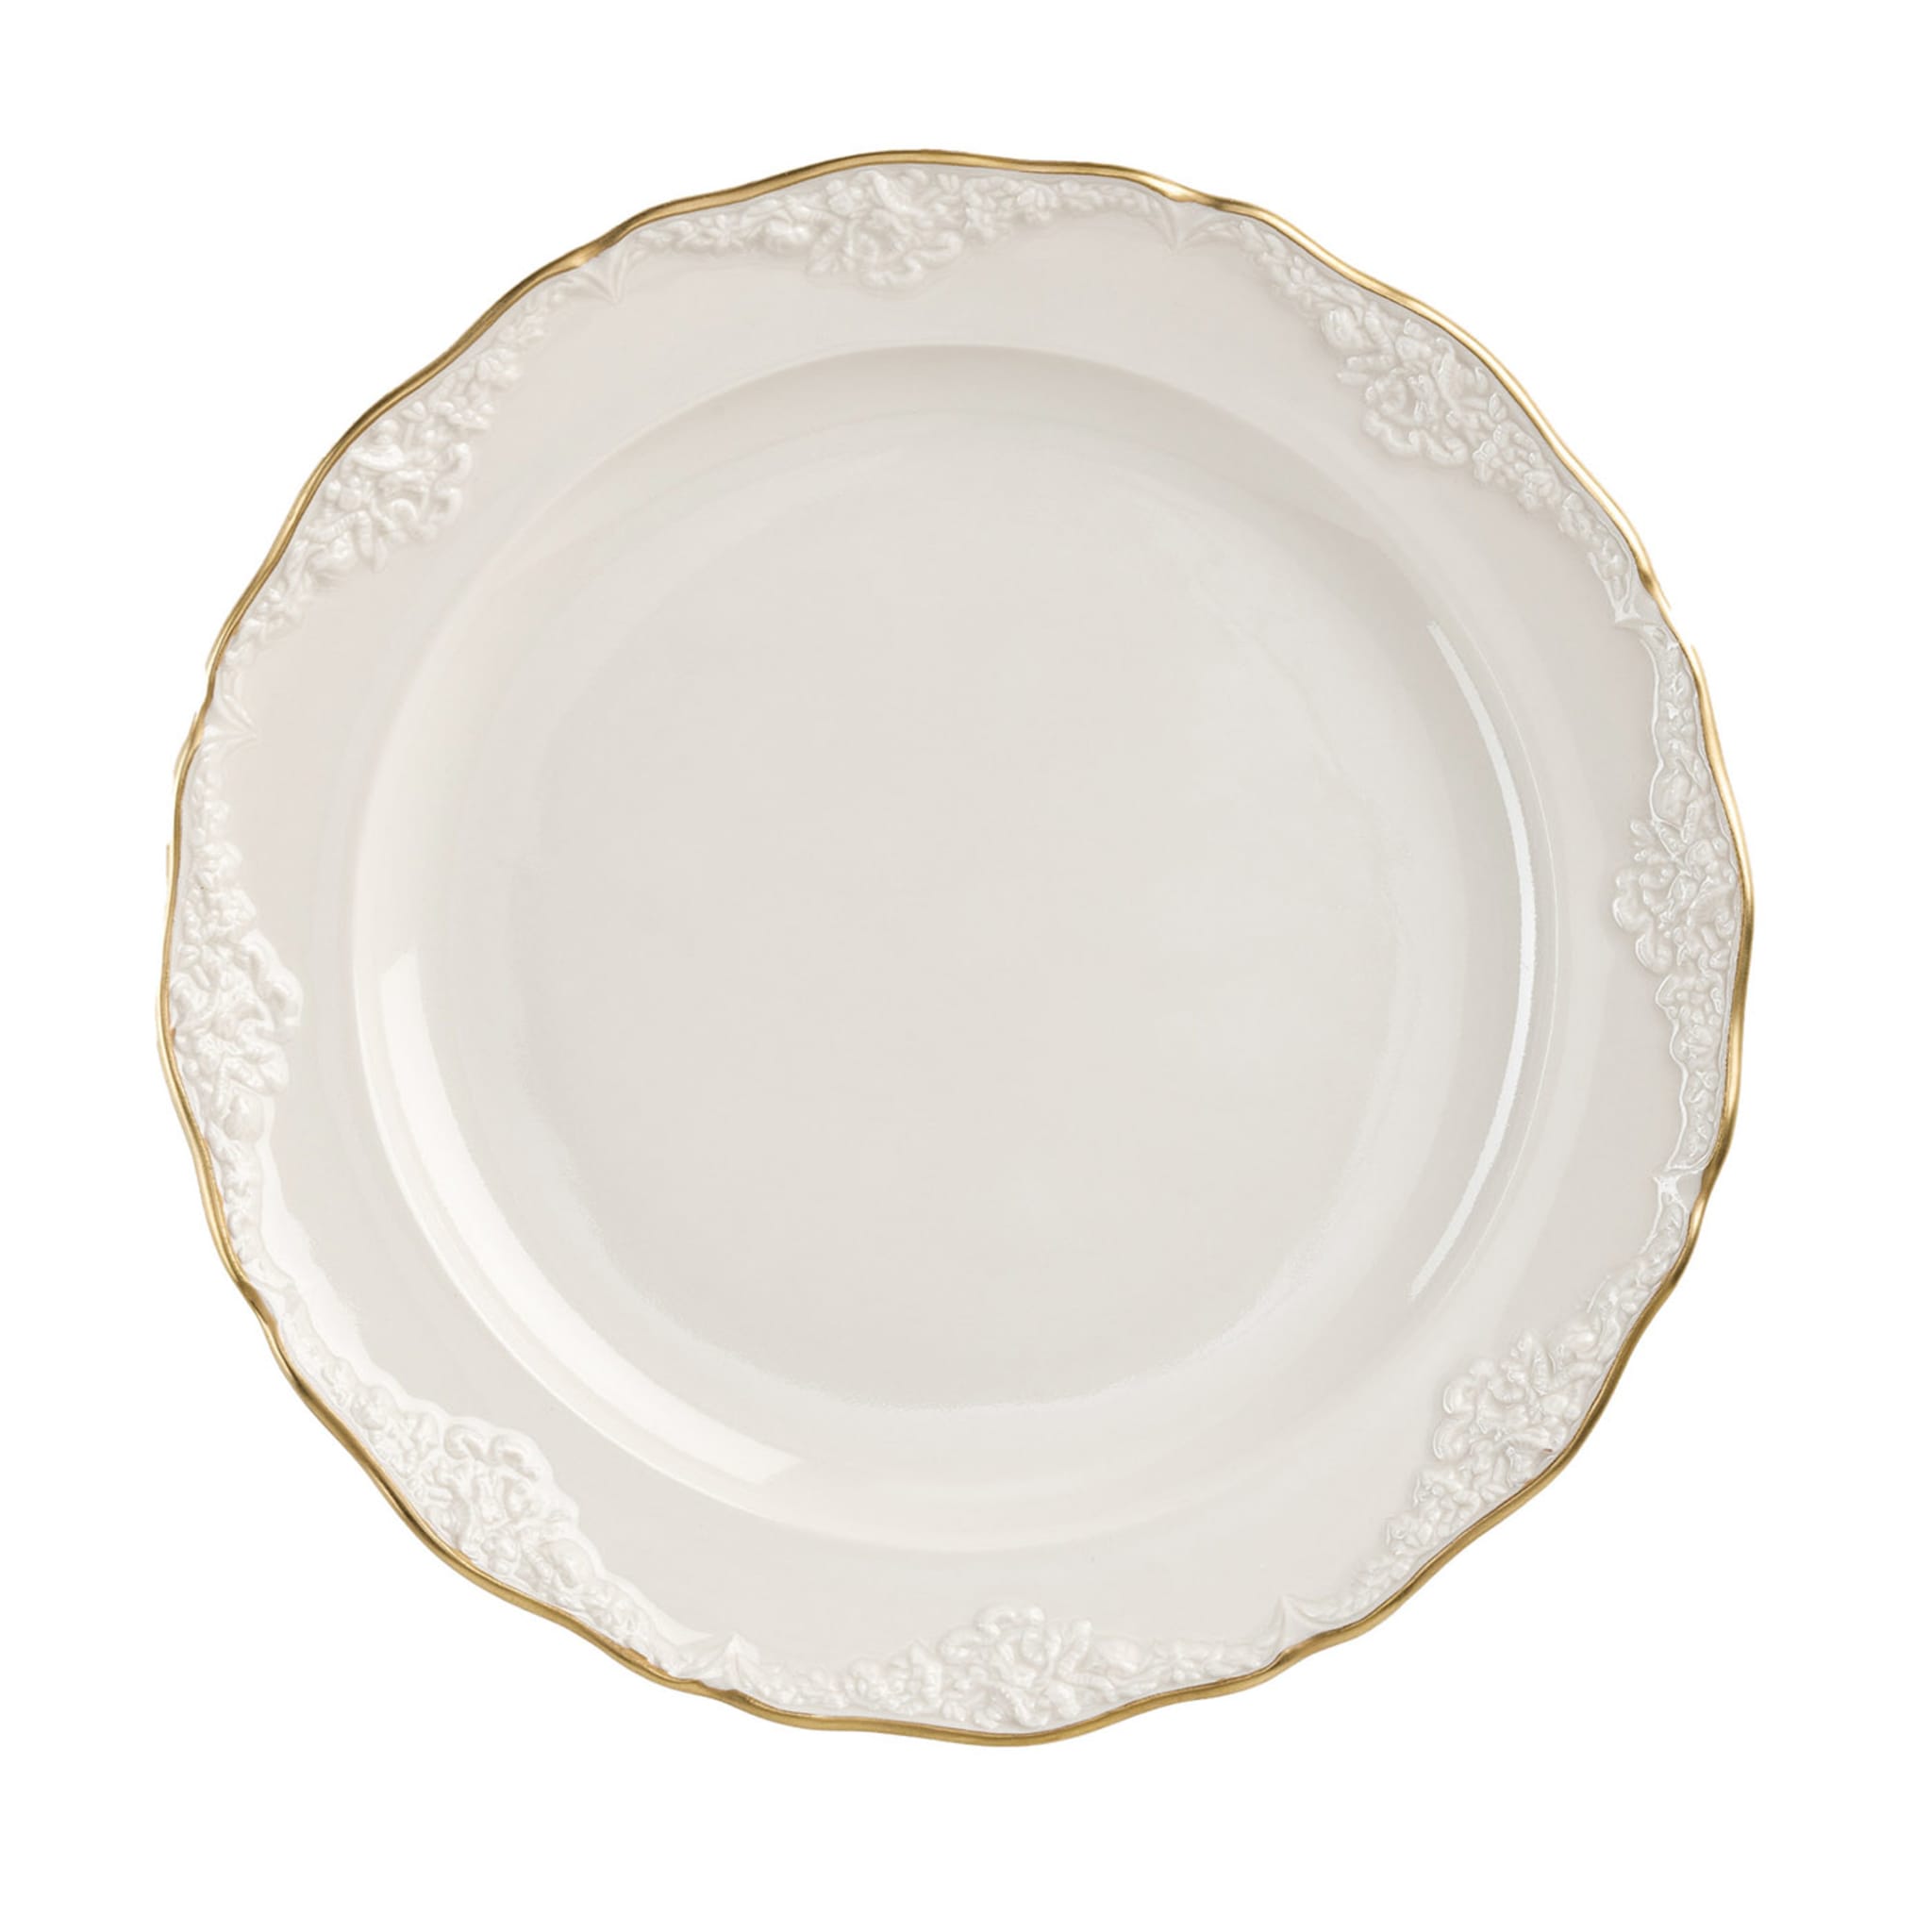 Irene Set of 2 Small White & Gold Dinner Plates - Main view